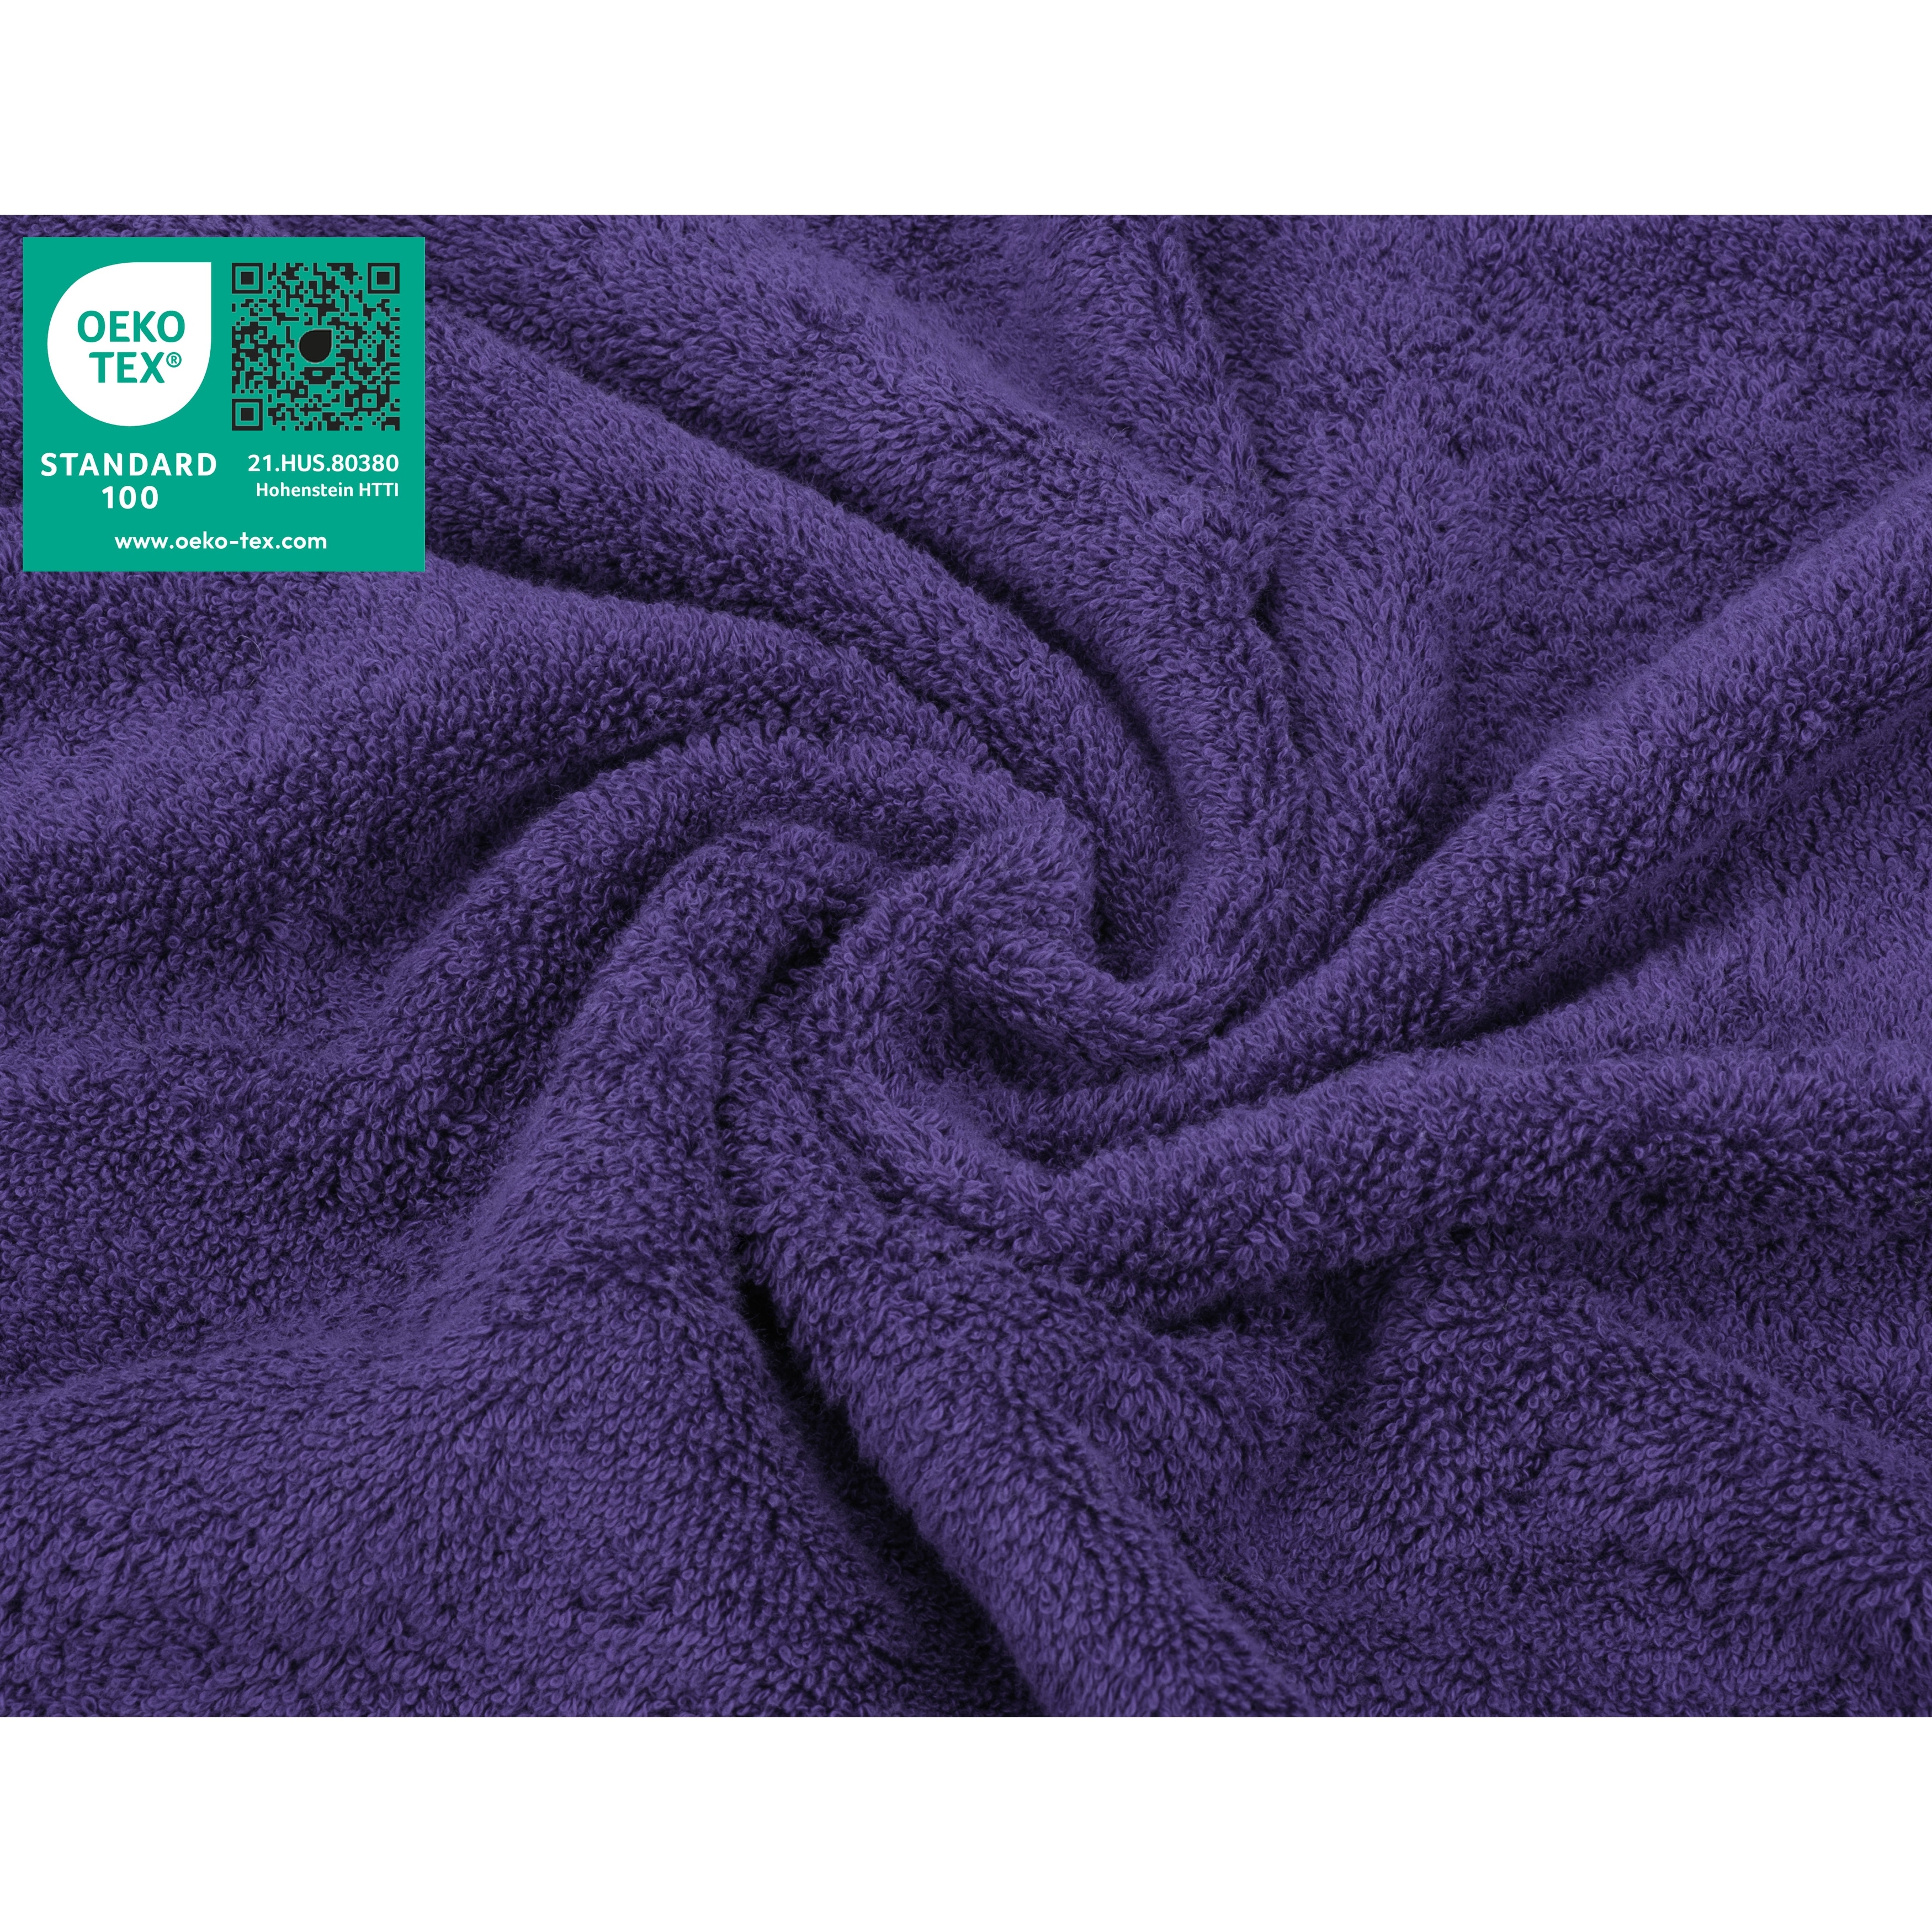 American Soft Linen 4-Piece Turkish Hand Towel Set - On Sale - Bed Bath &  Beyond - 33411470